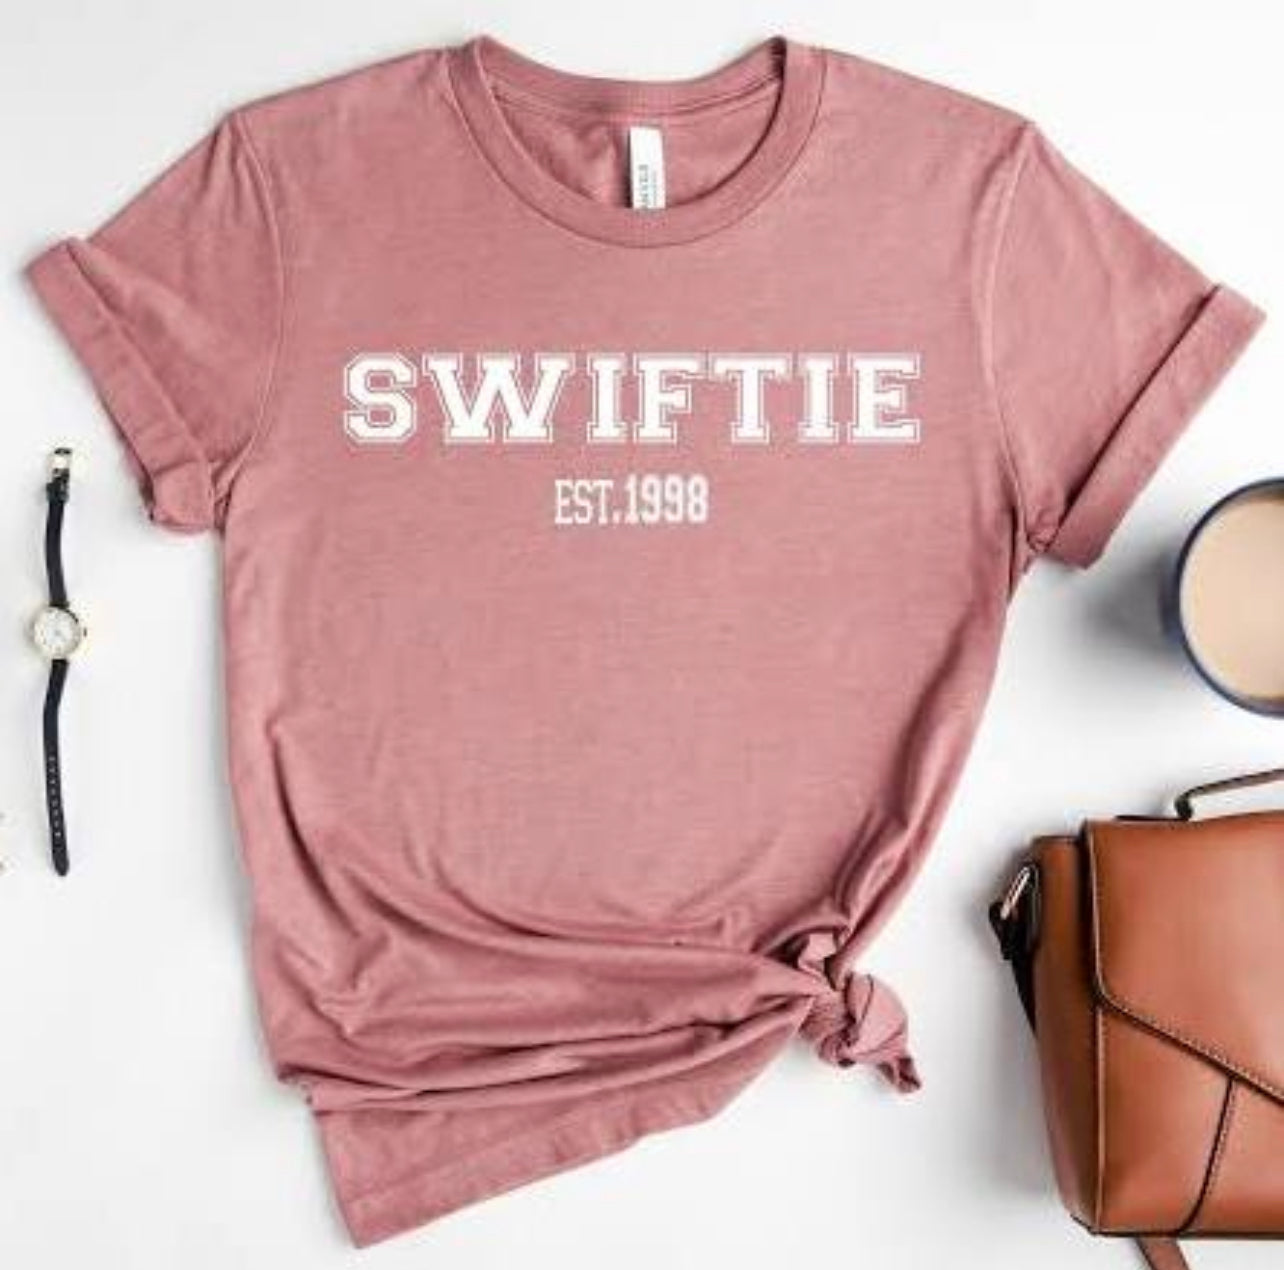 Swifty Shirt| Taylor shirt| T swift shirt| 1989 taylor swift tee| gift for taylor swift fan| Taylor shirt